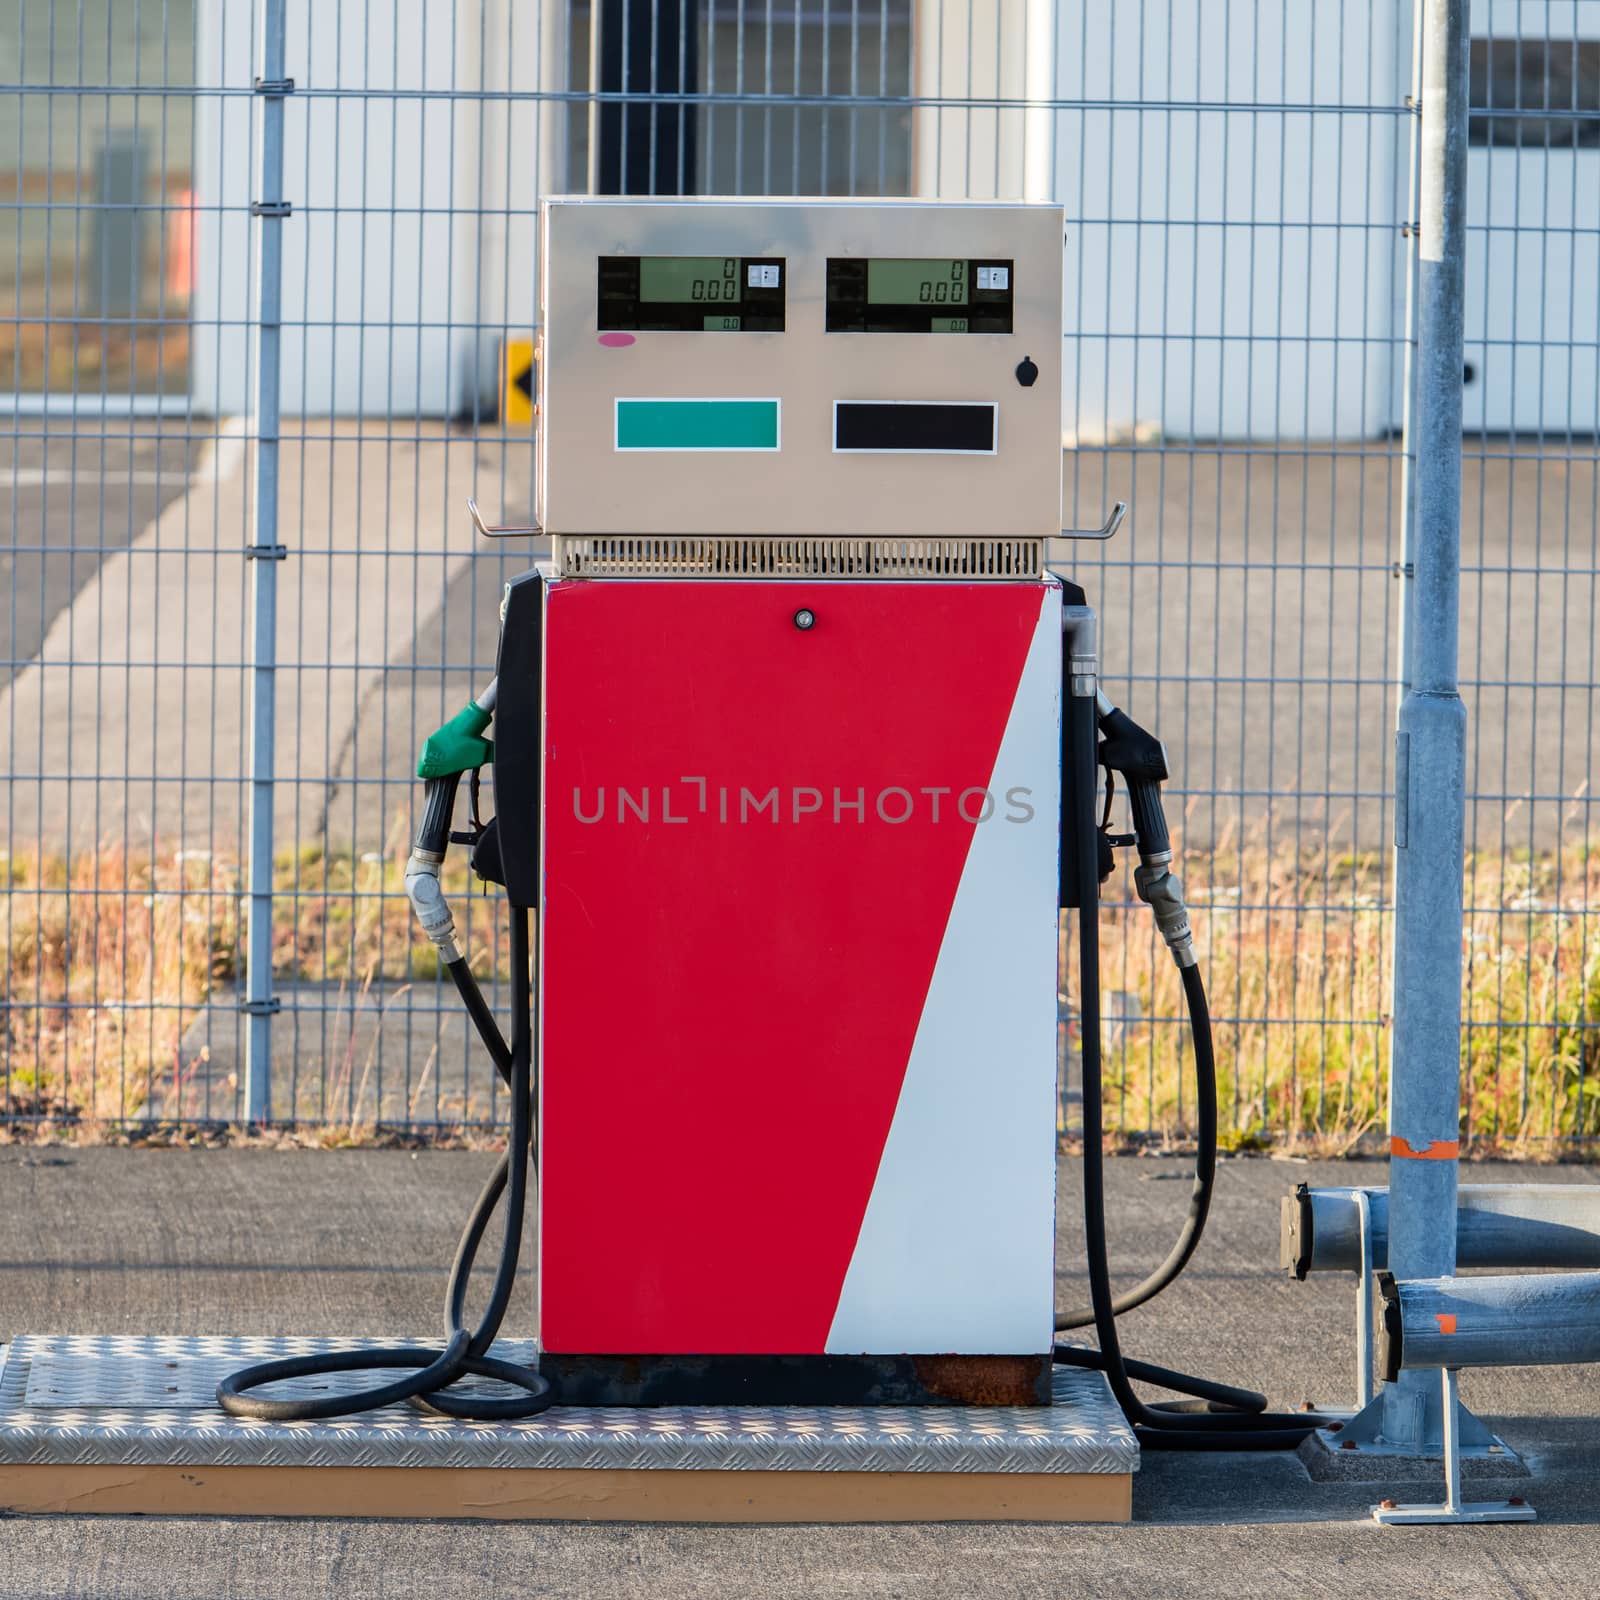 Fuel pumps - Iceland by michaklootwijk